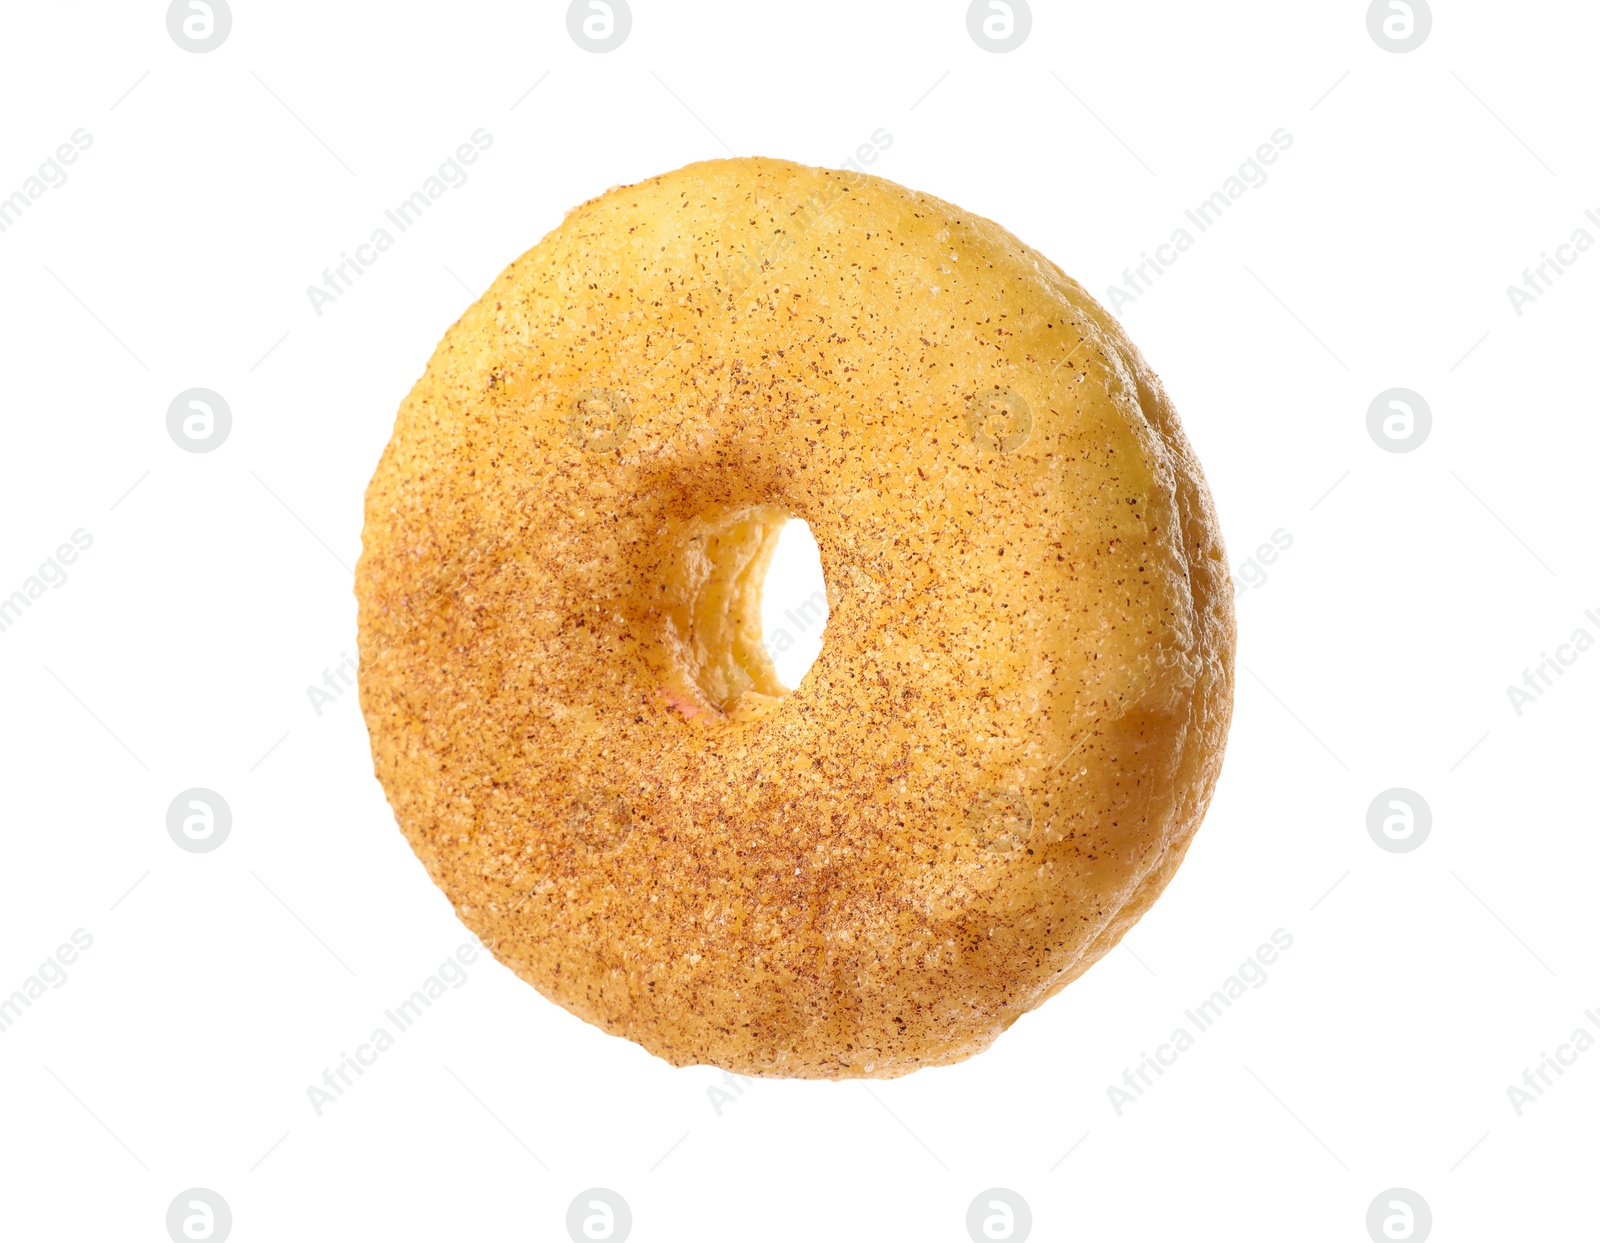 Photo of Sweet tasty glazed donut with cinnamon powder isolated on white